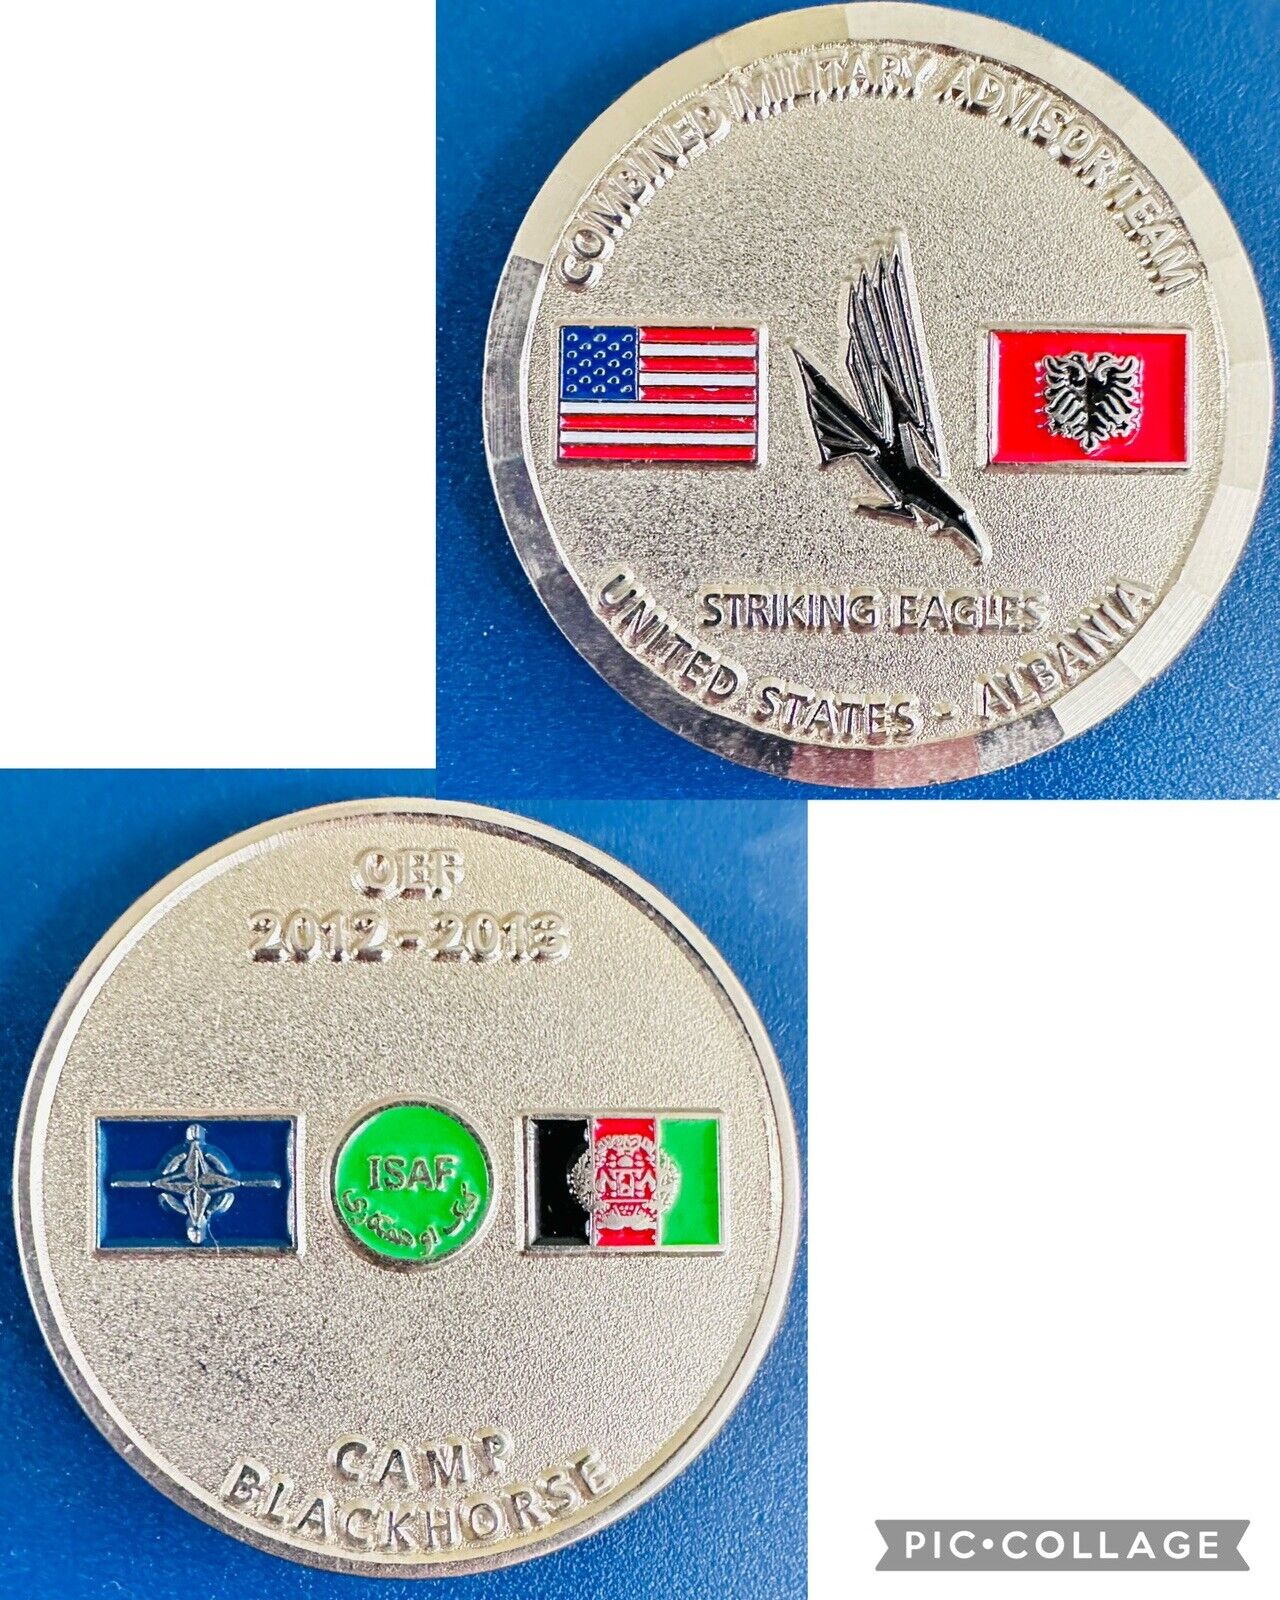 Striking Eagles United States Albania OEF Camp Blackhorse Challenge Coin